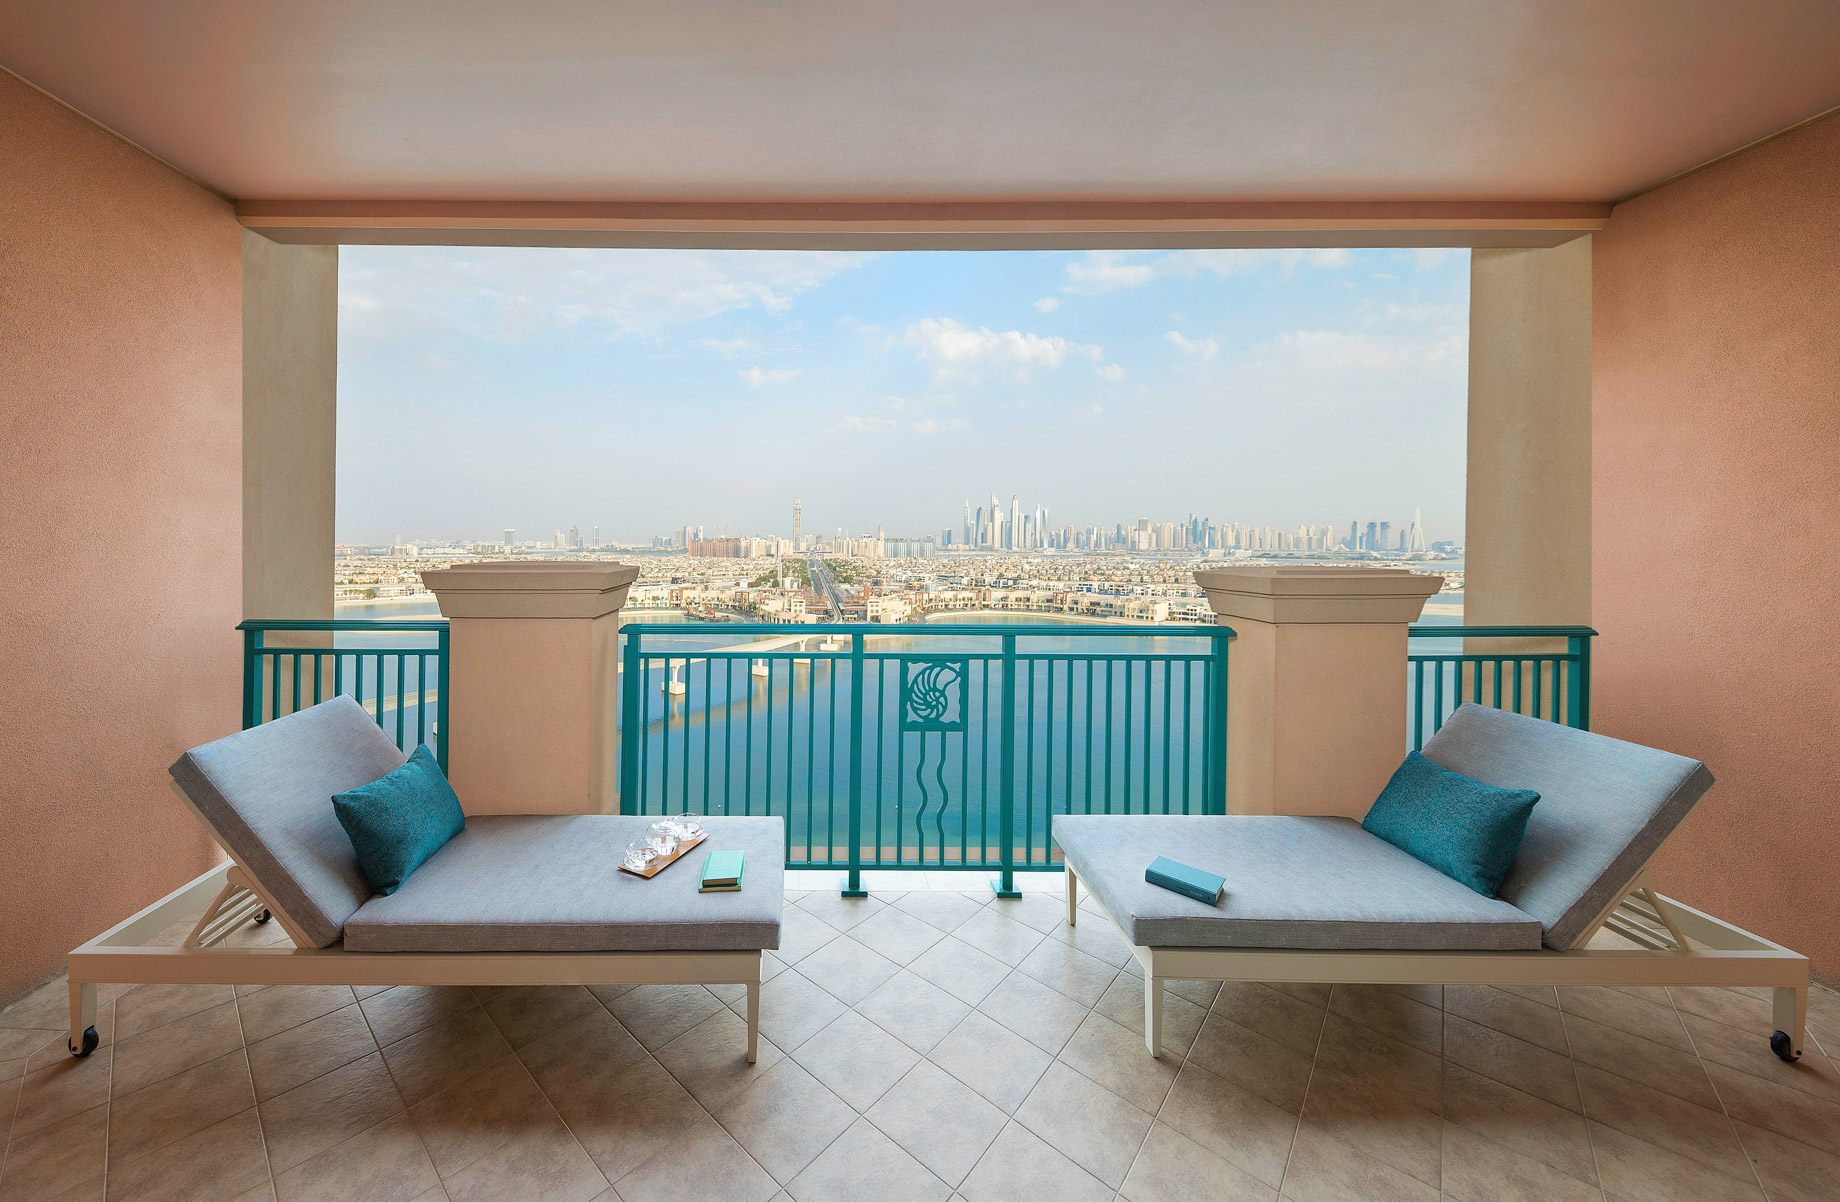 Atlantis The Palm Resort - Crescent Rd, Dubai, UAE - Regal Club Suite Balcony